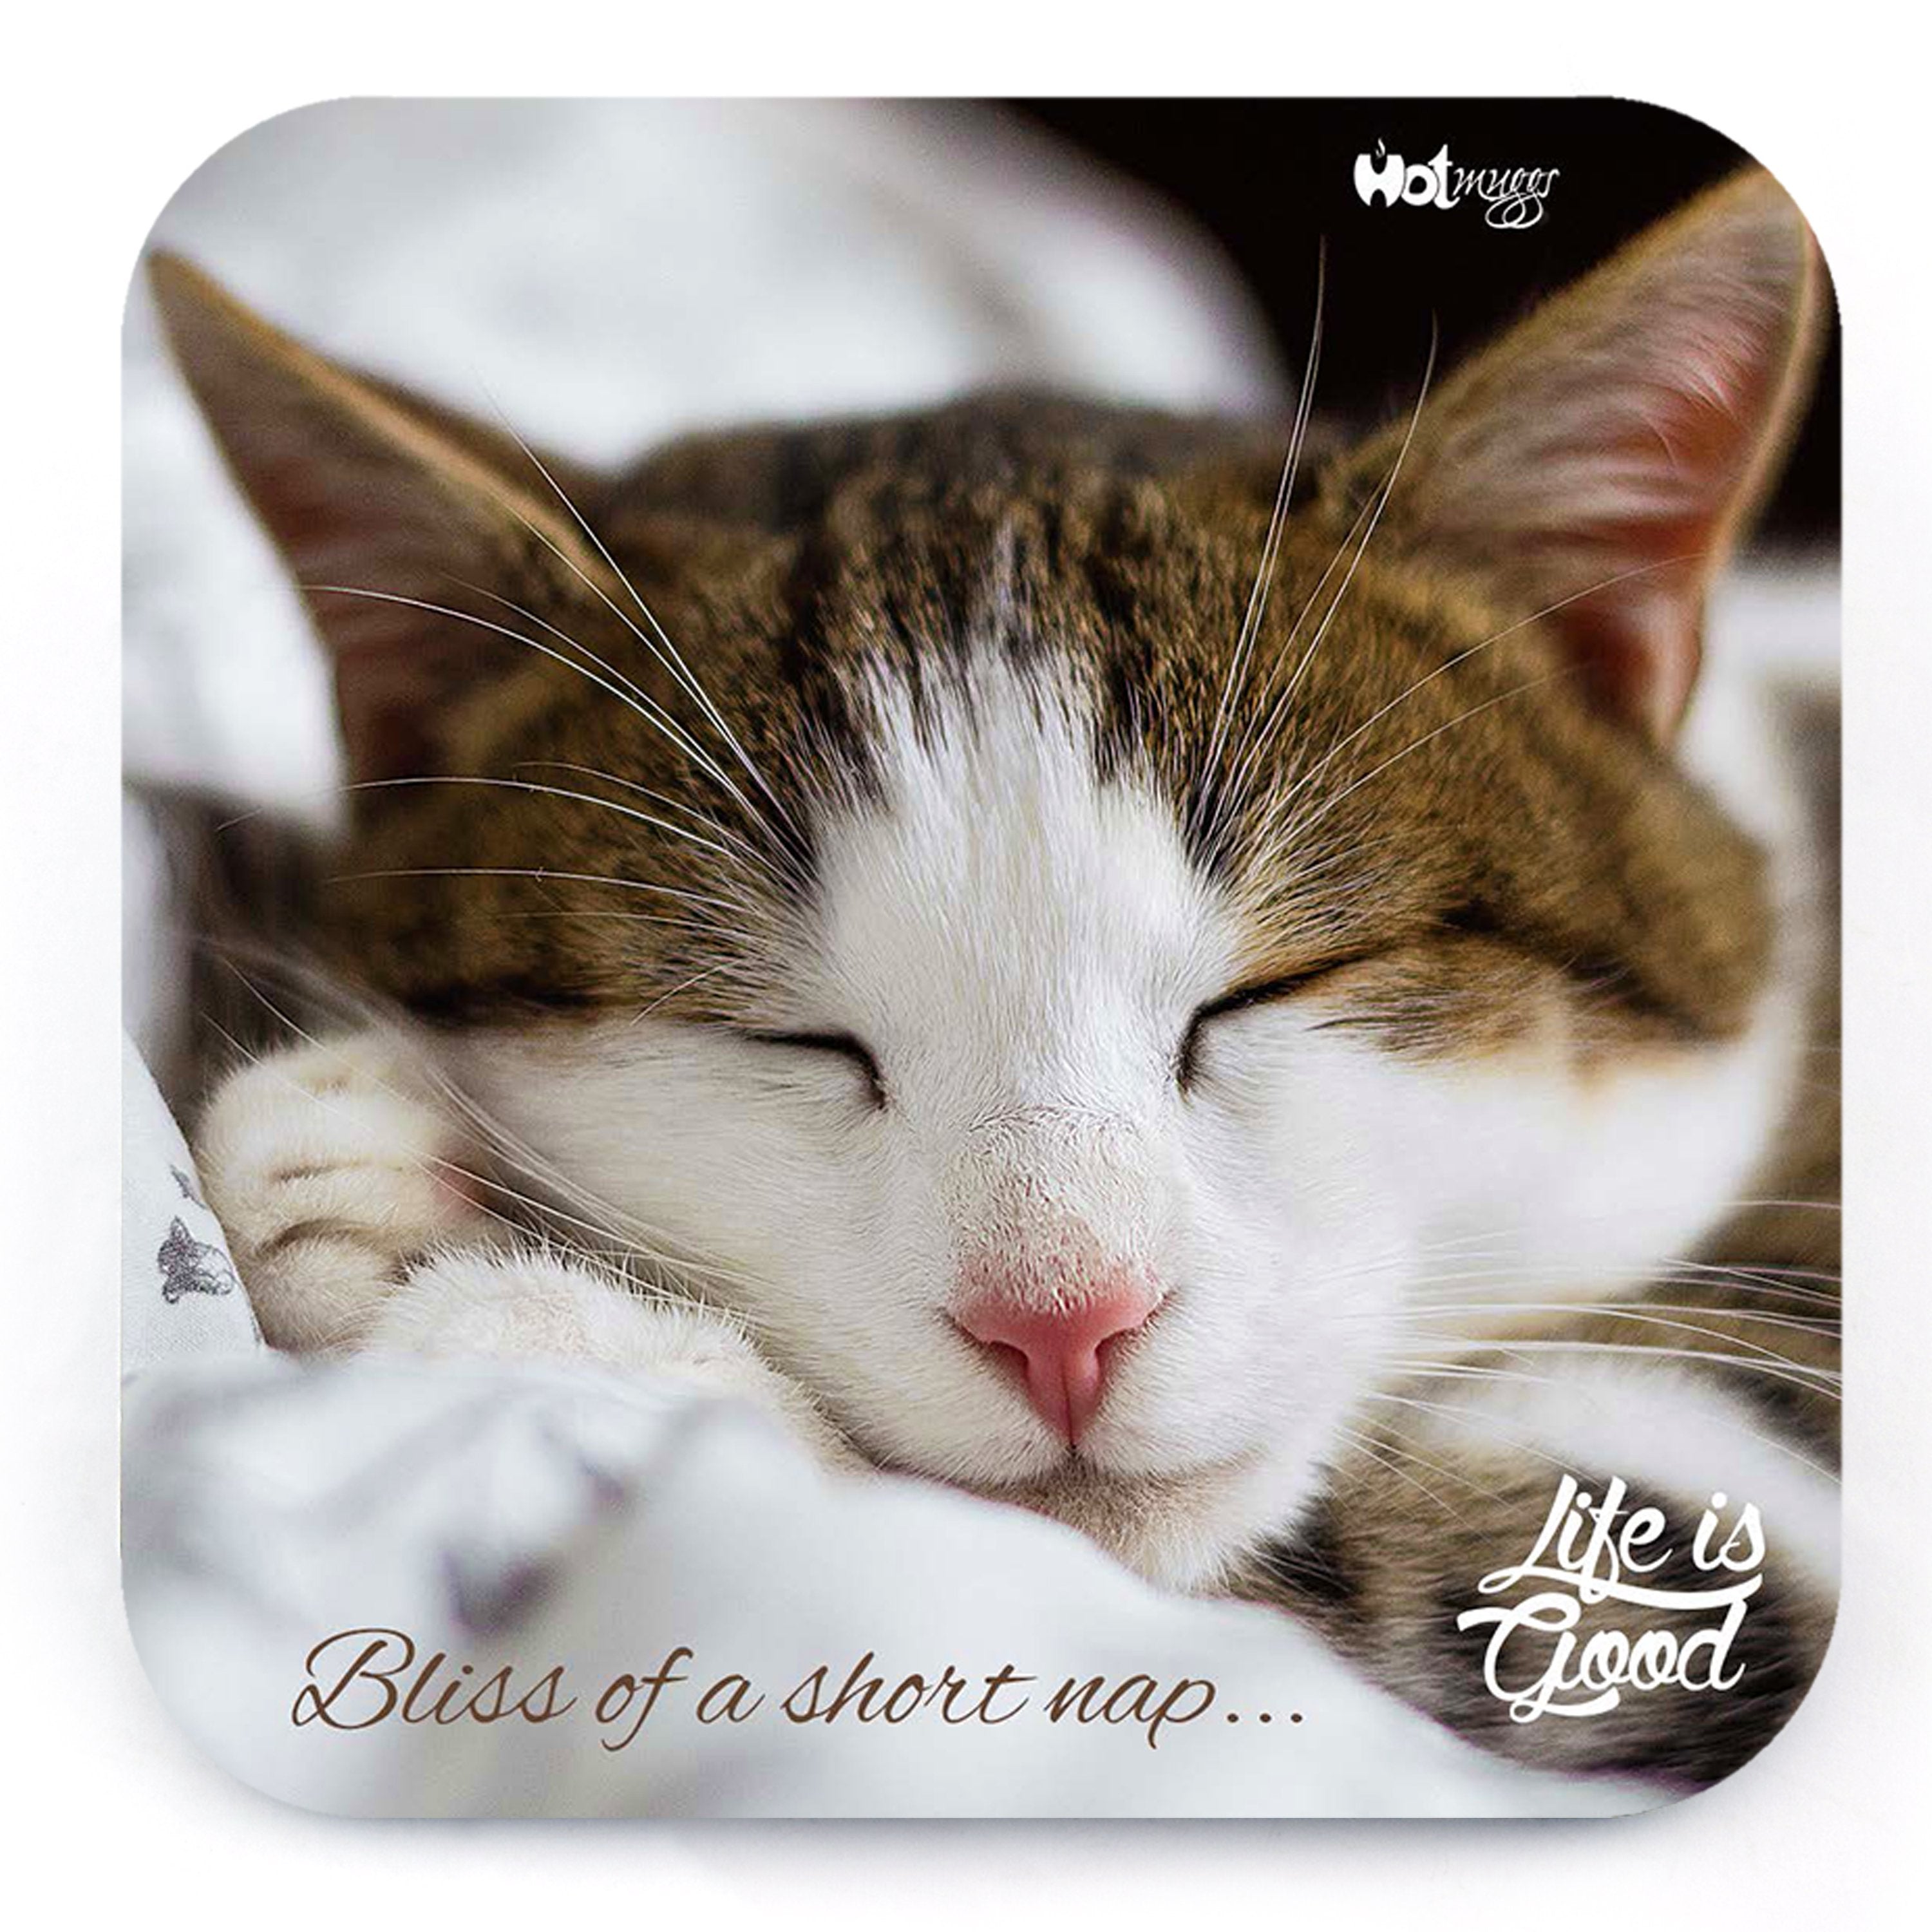 cats-bliss-of-a-nap-coaster-single